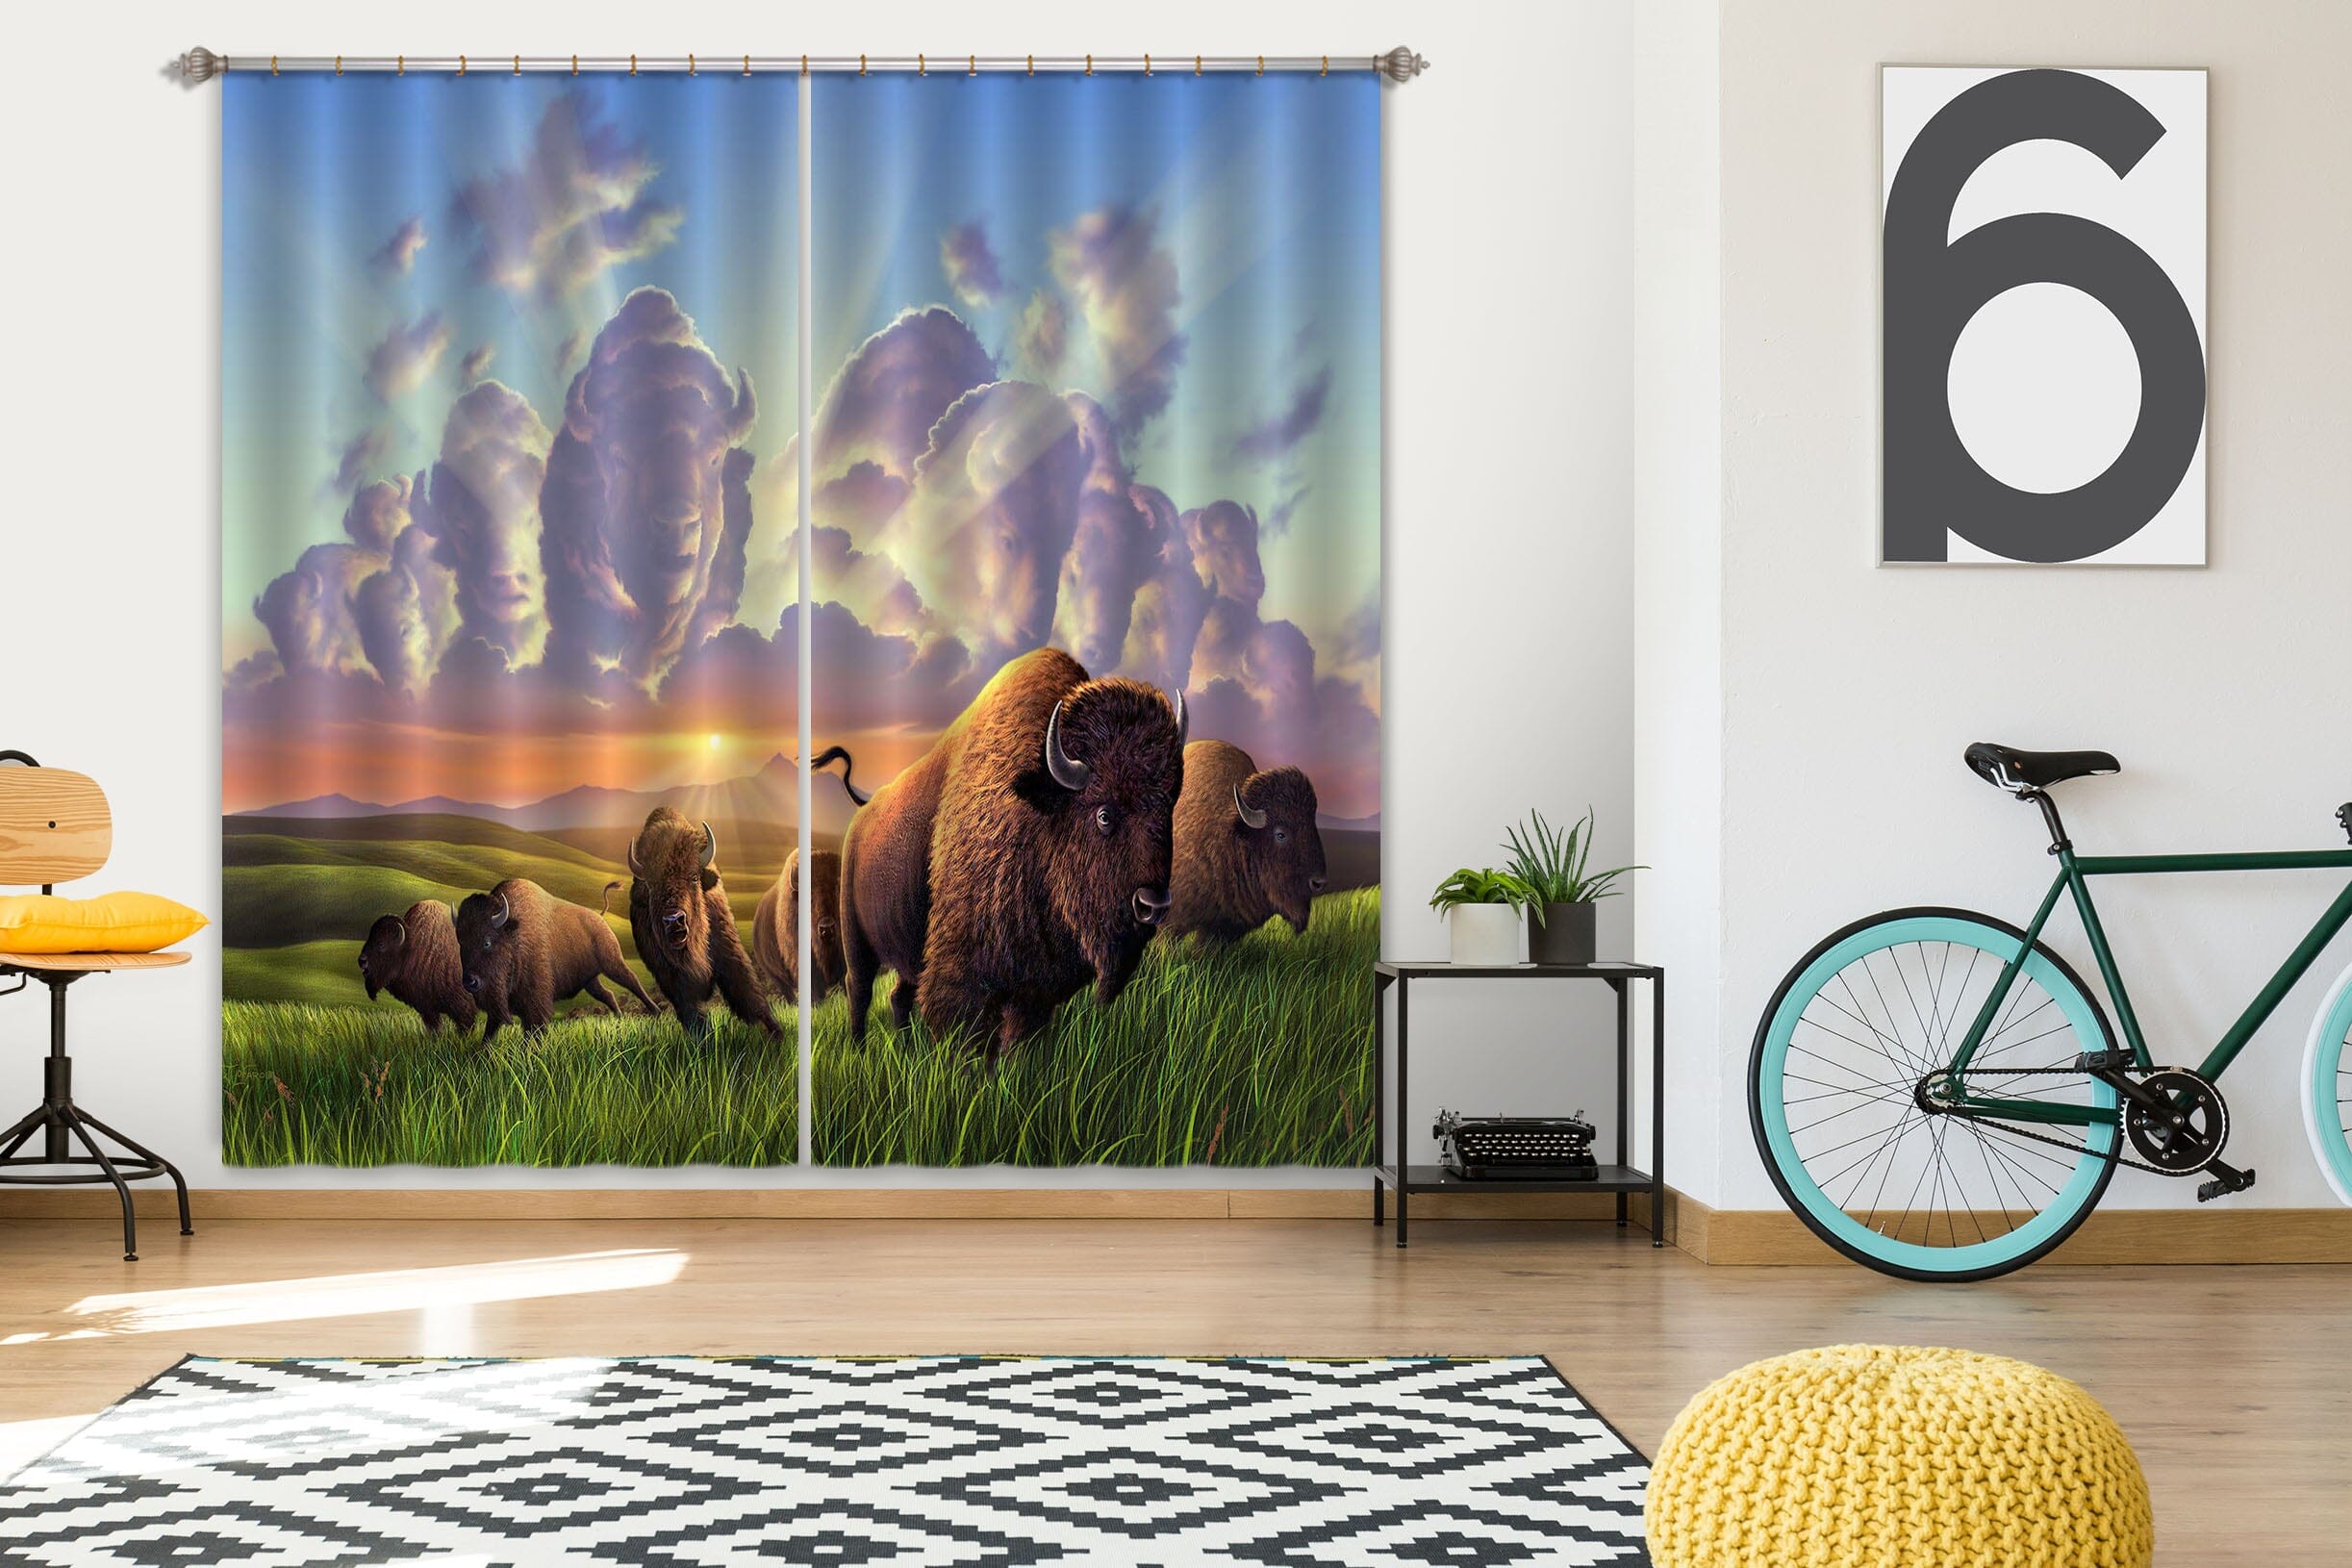 3D Stampede 047 Jerry LoFaro Curtain Curtains Drapes Curtains AJ Creativity Home 